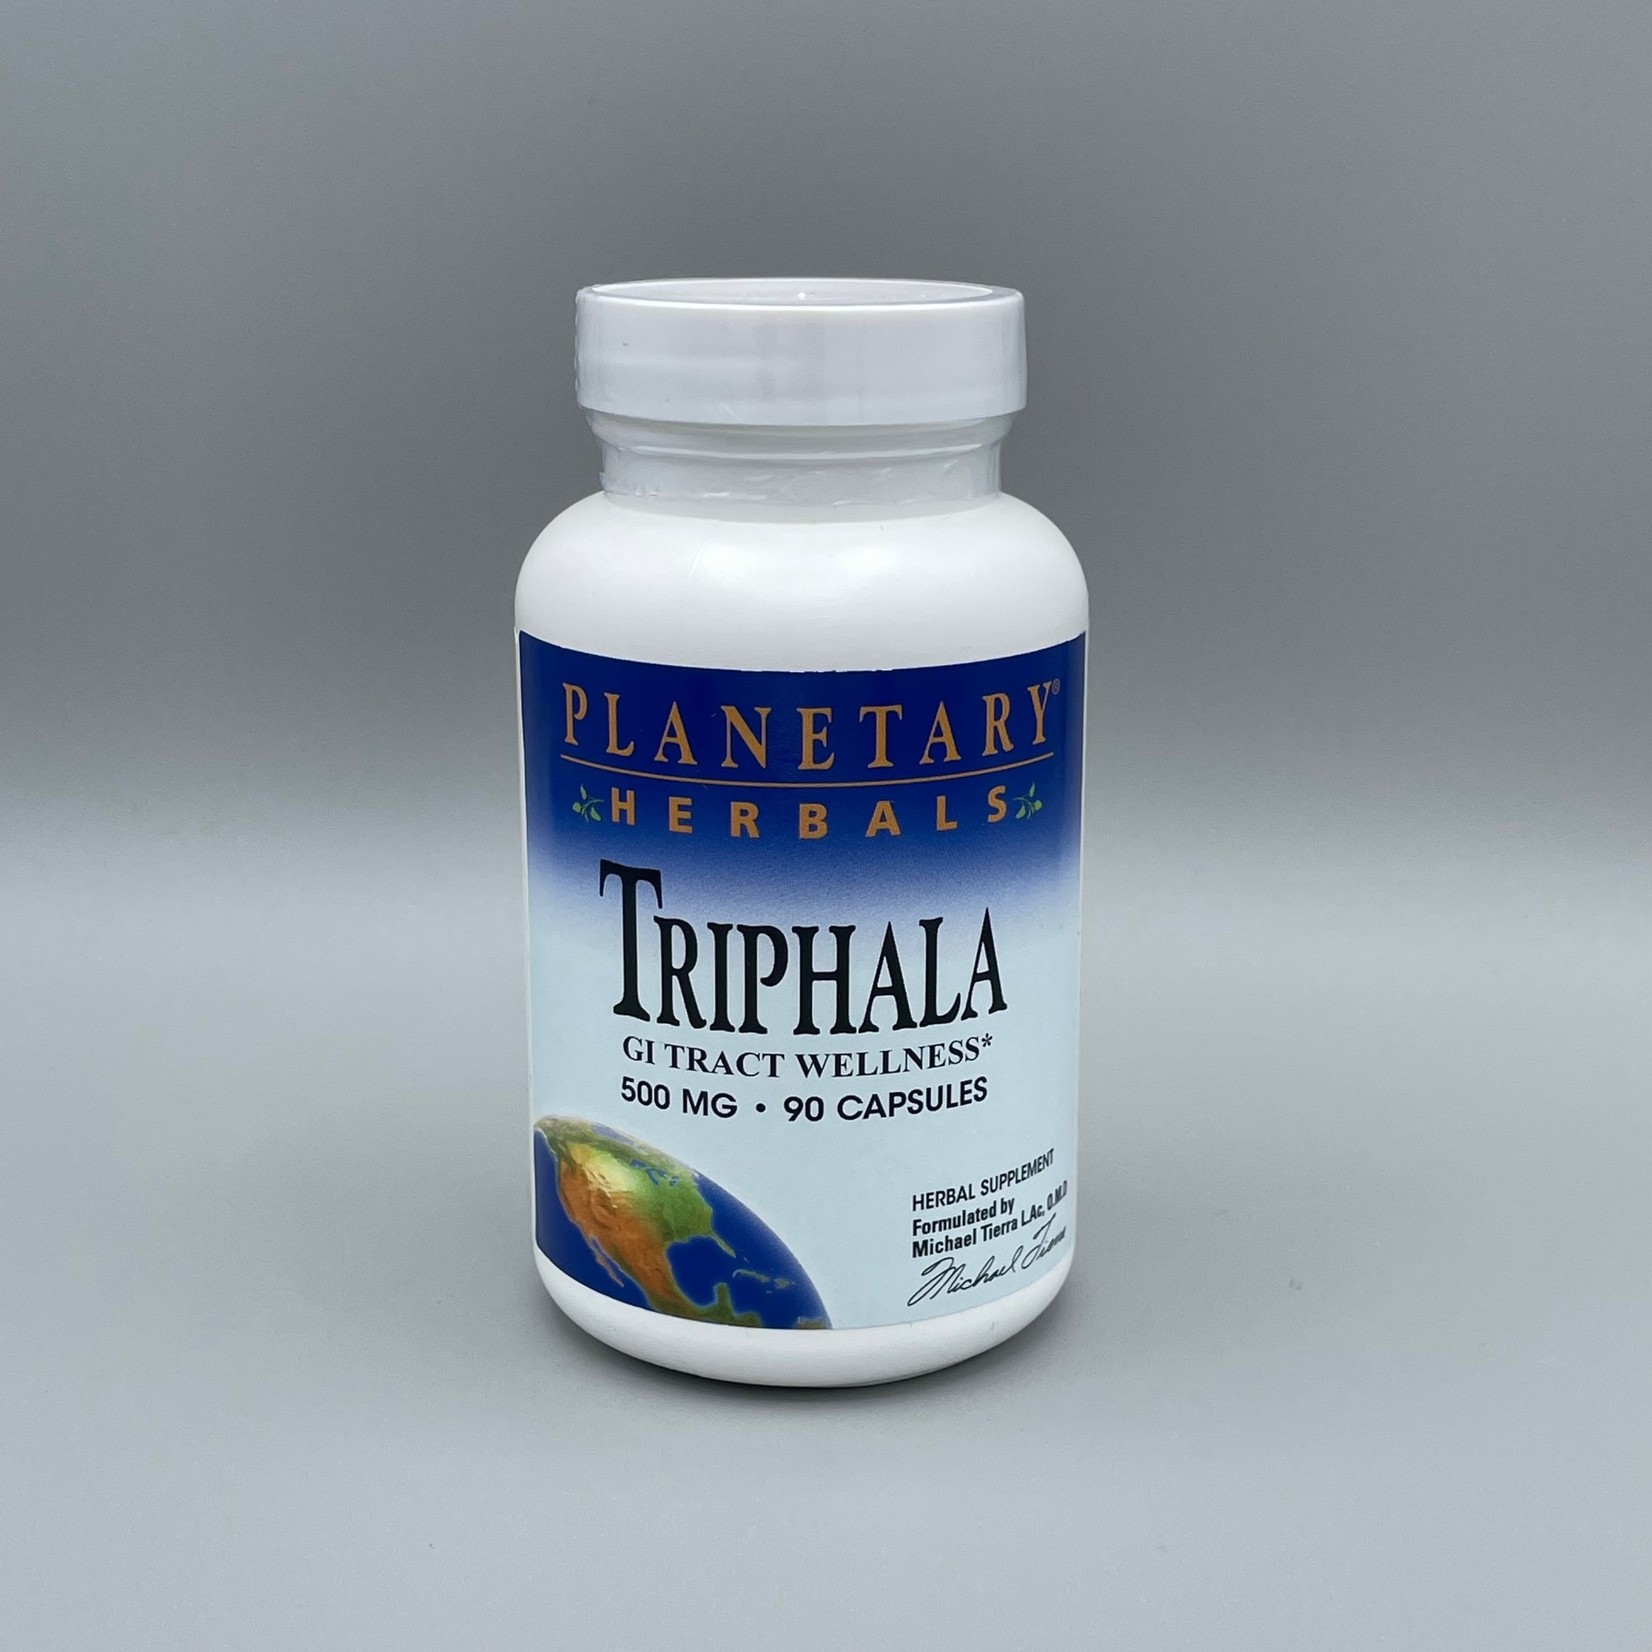 Planetary Herbals Planetary Herbals Triphala (GI Tract Wellness) - 500 mg, 90 Capsules